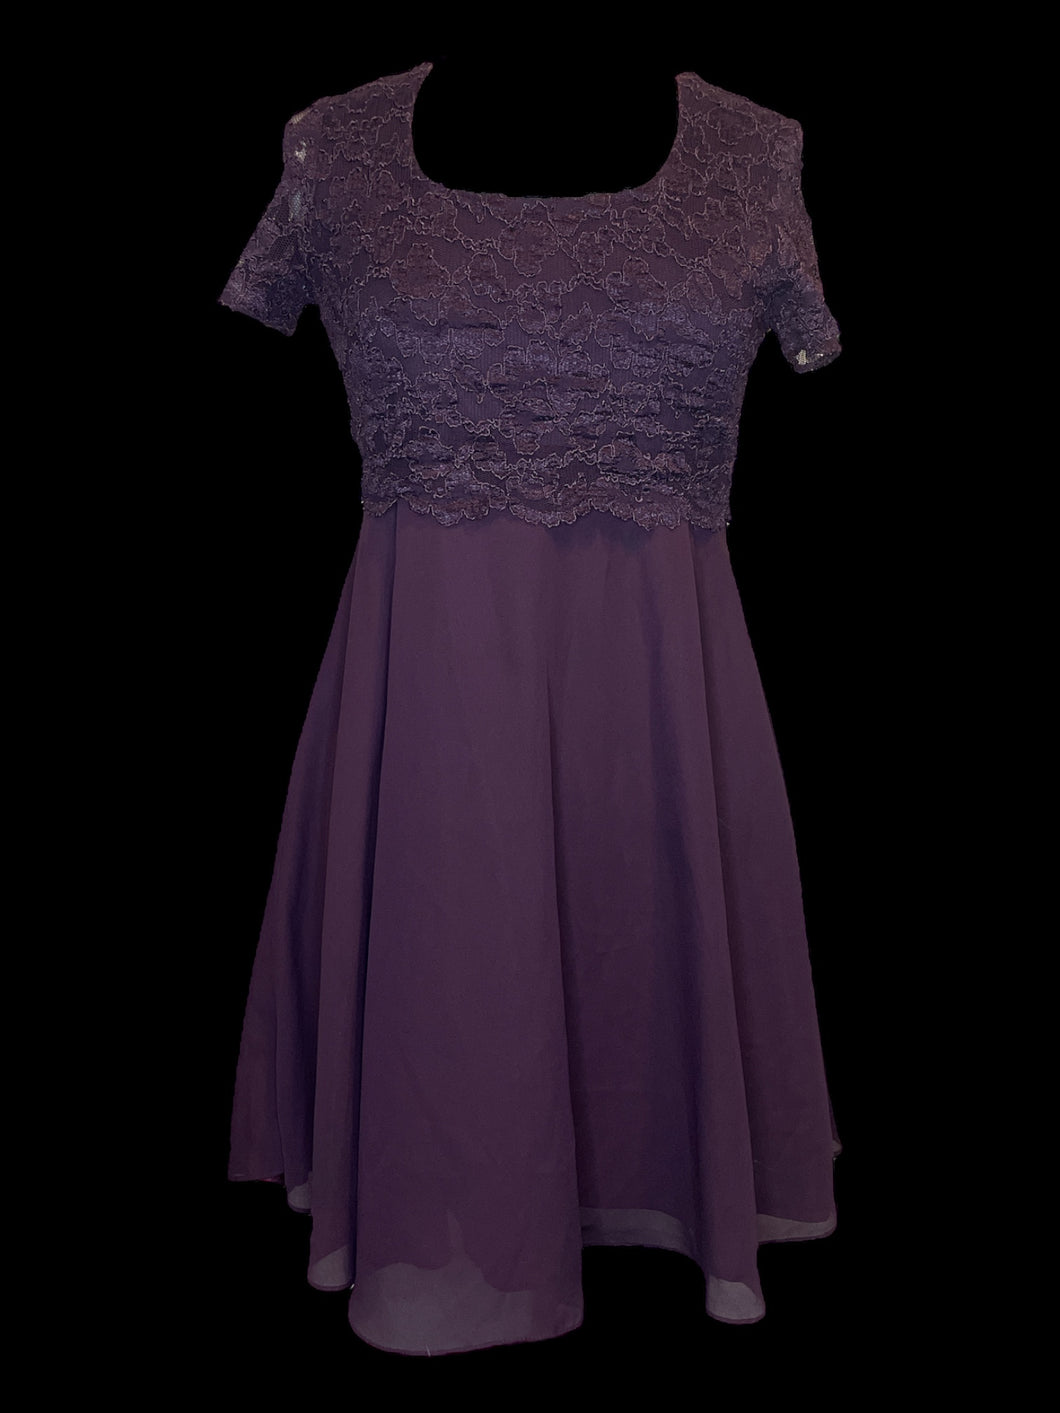 M Dark plum short sleeve scoop neck dress w/ lace top, & burgundy petticoat